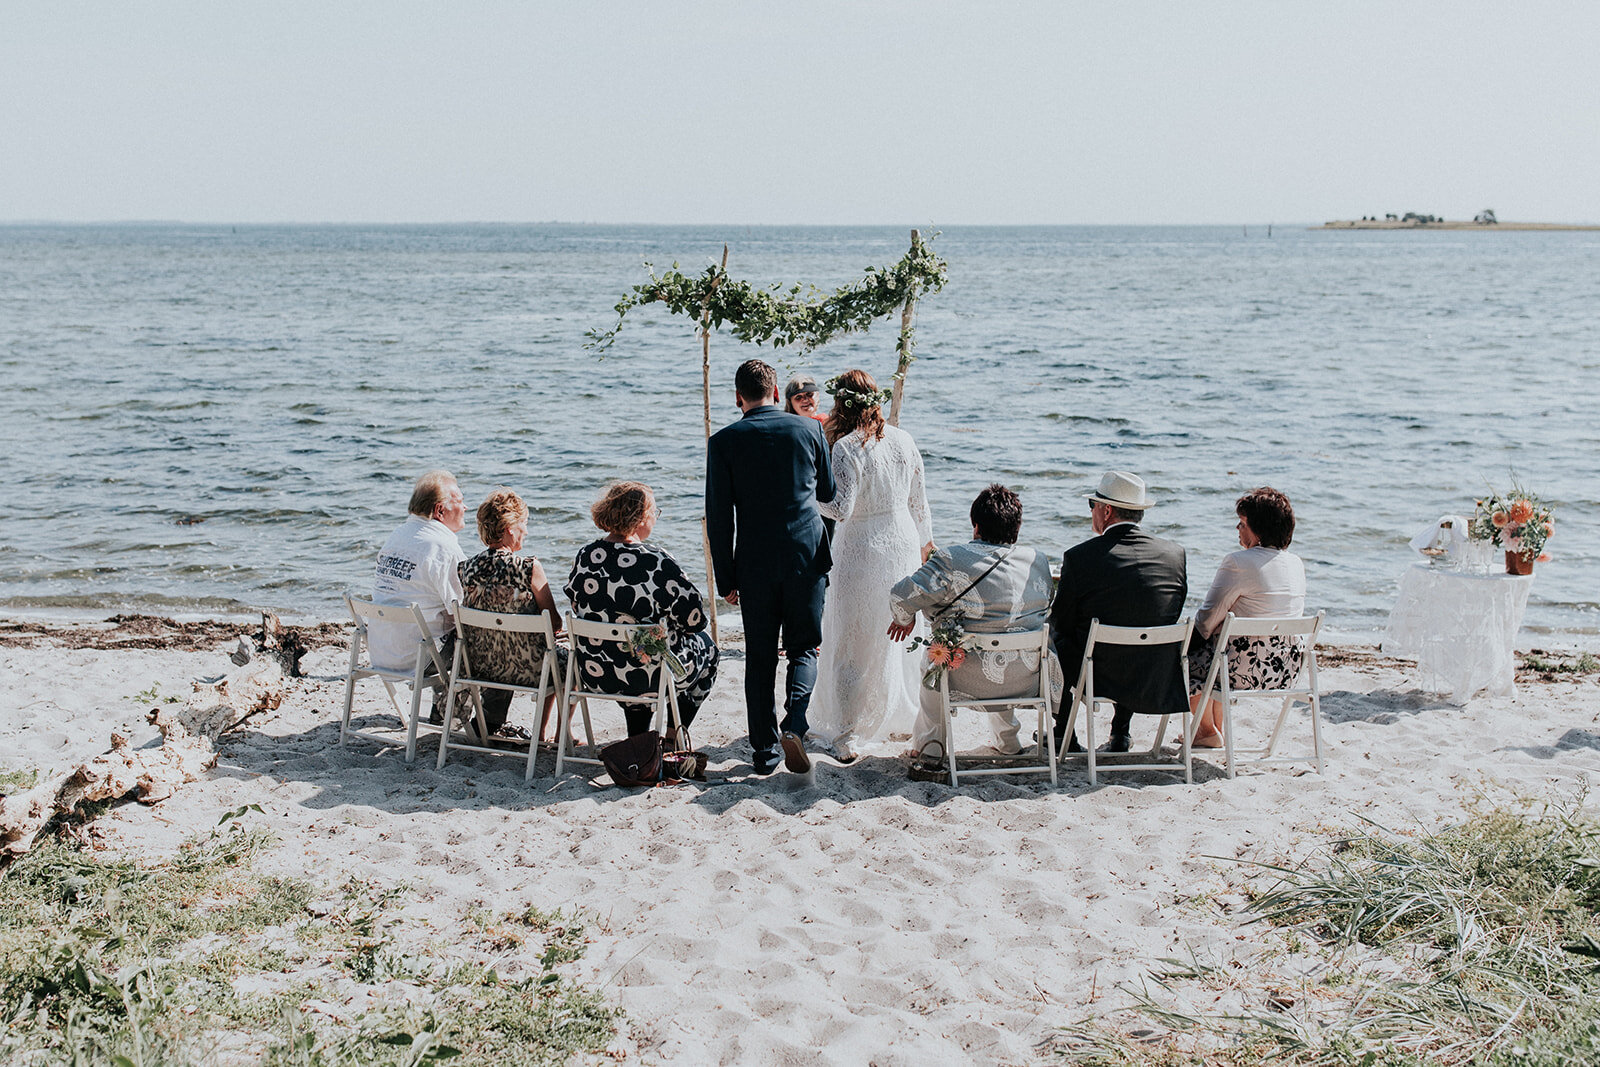 beachside wedding setup - Aero Island, Denmark - Wedding planned and coordinated by Danish Island Weddings - Full service wedding planners